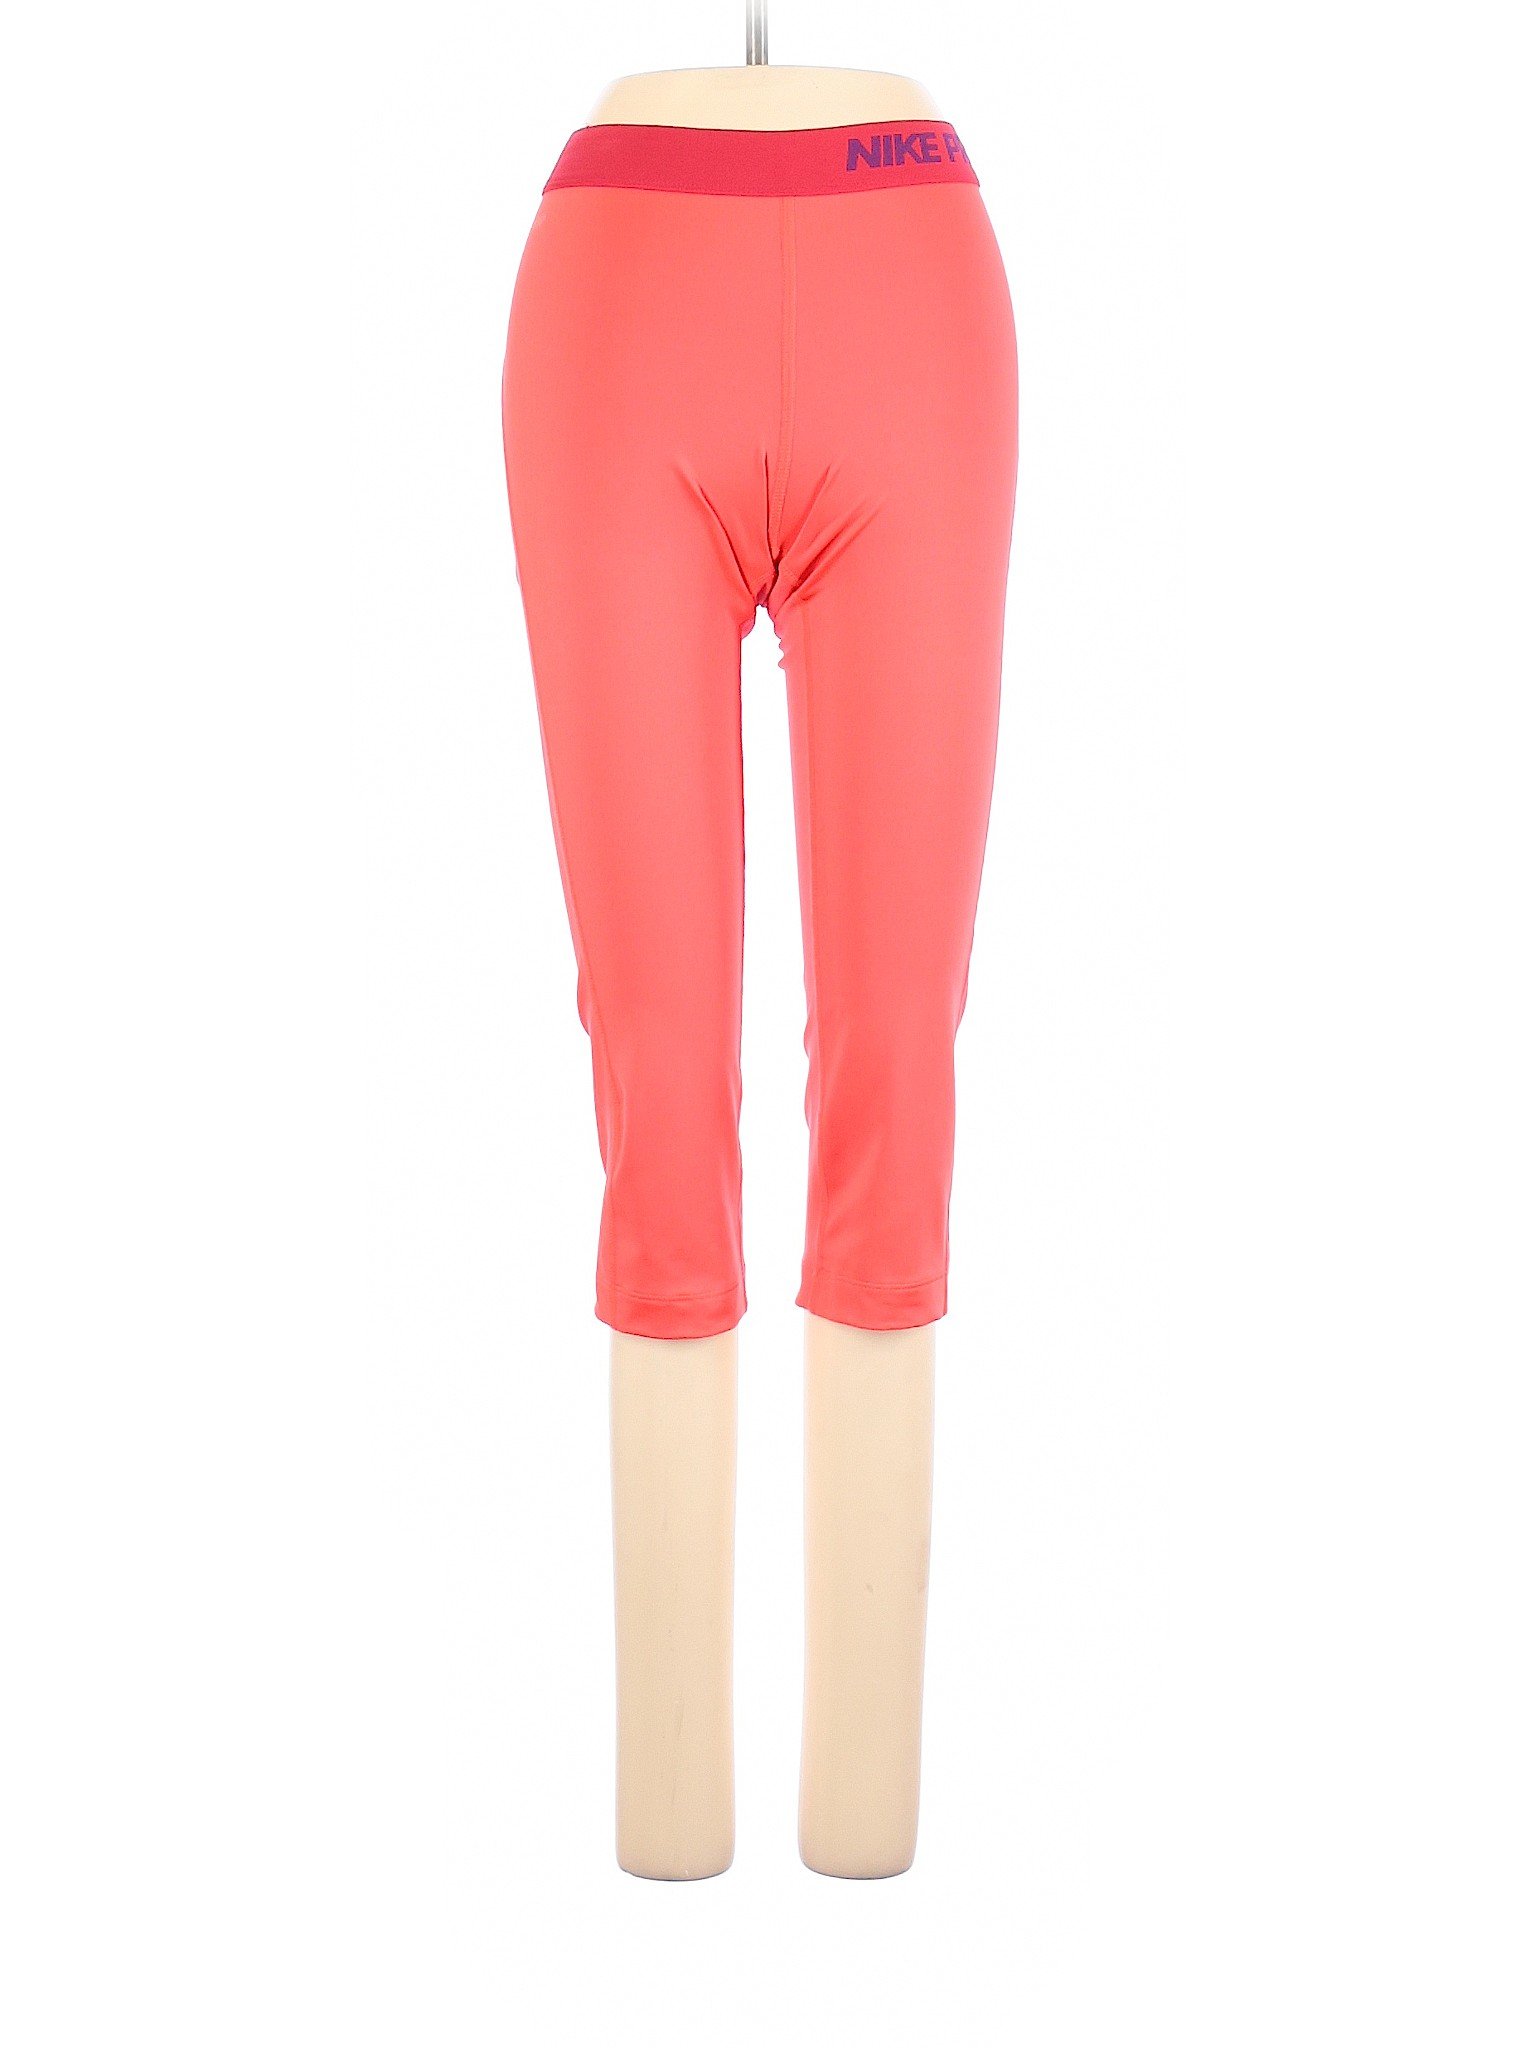 Nike Women Pink Active Pants XS | eBay